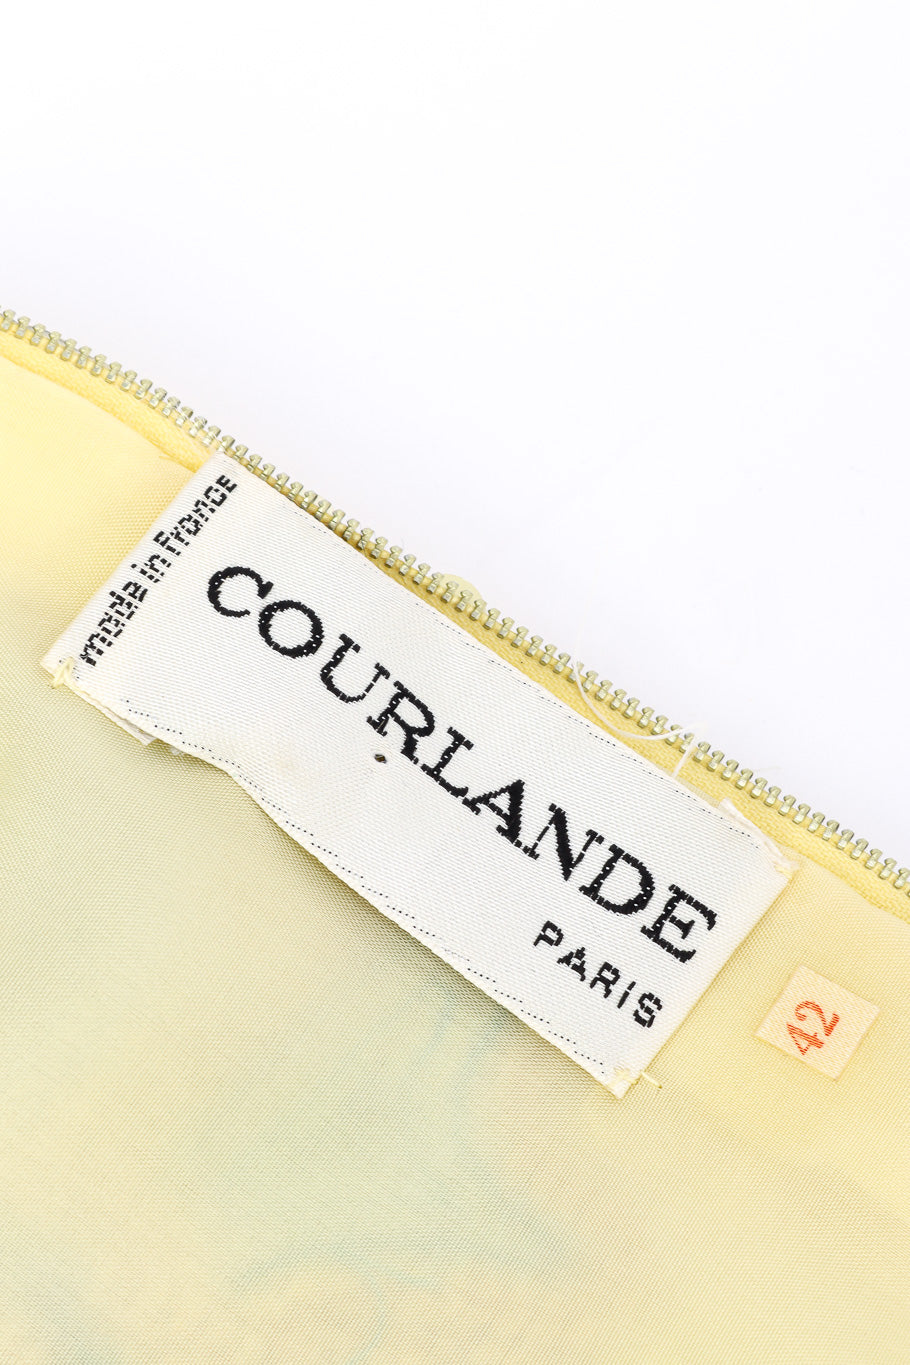 Vintage Courlande Silk Organza Flower Sequin Dress signature closeup @Recessla